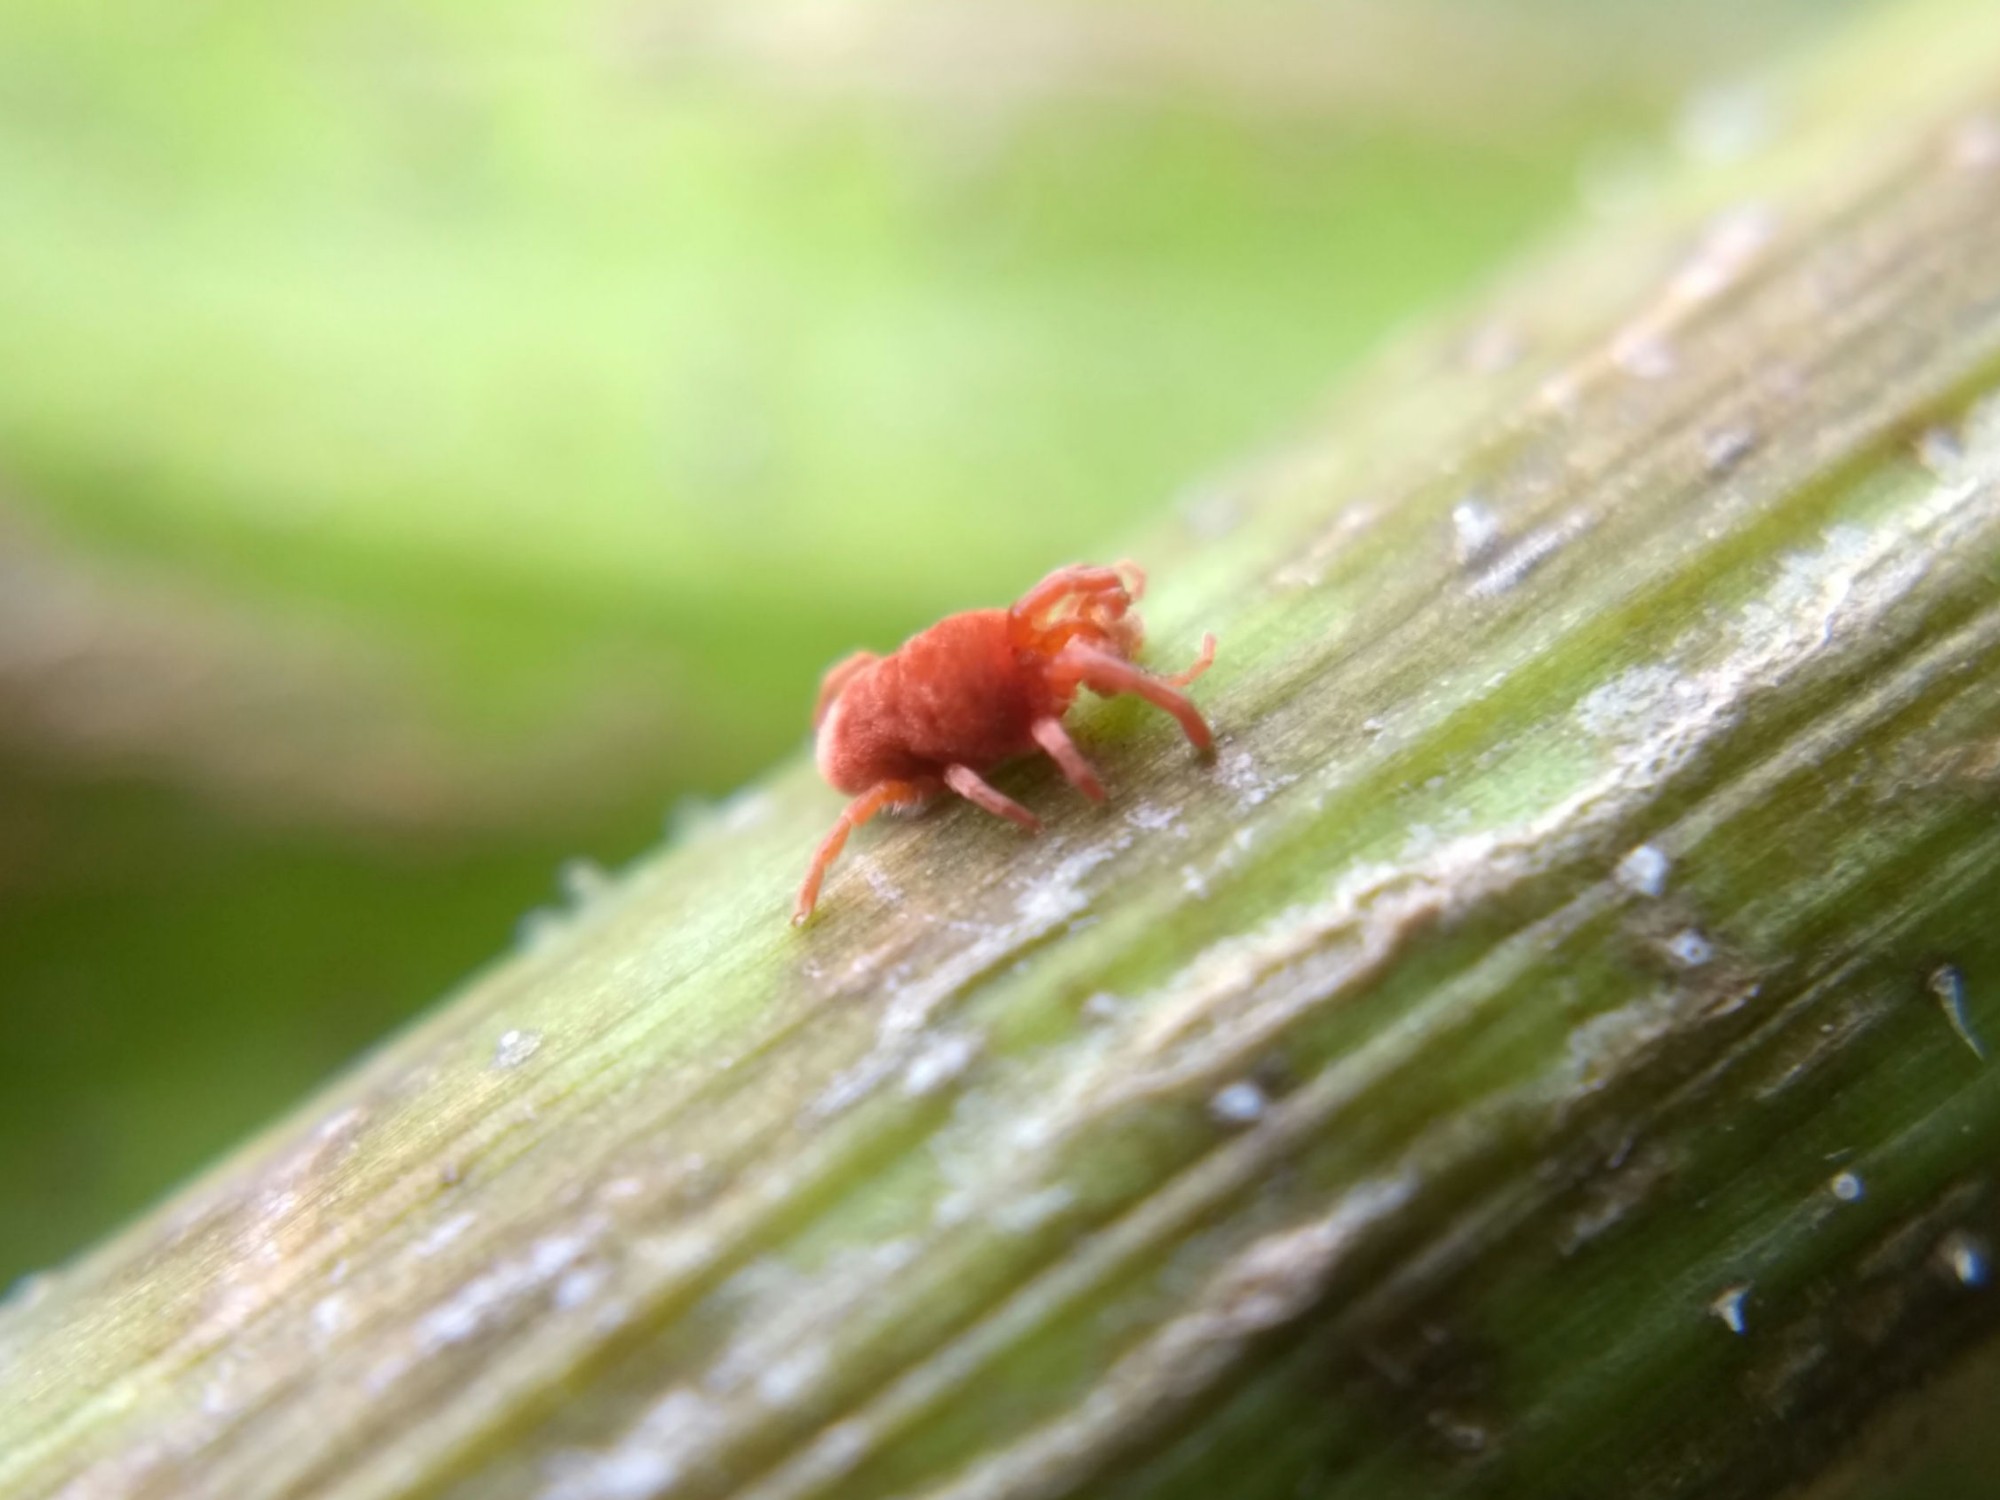 A red velvet mite on a plant stem